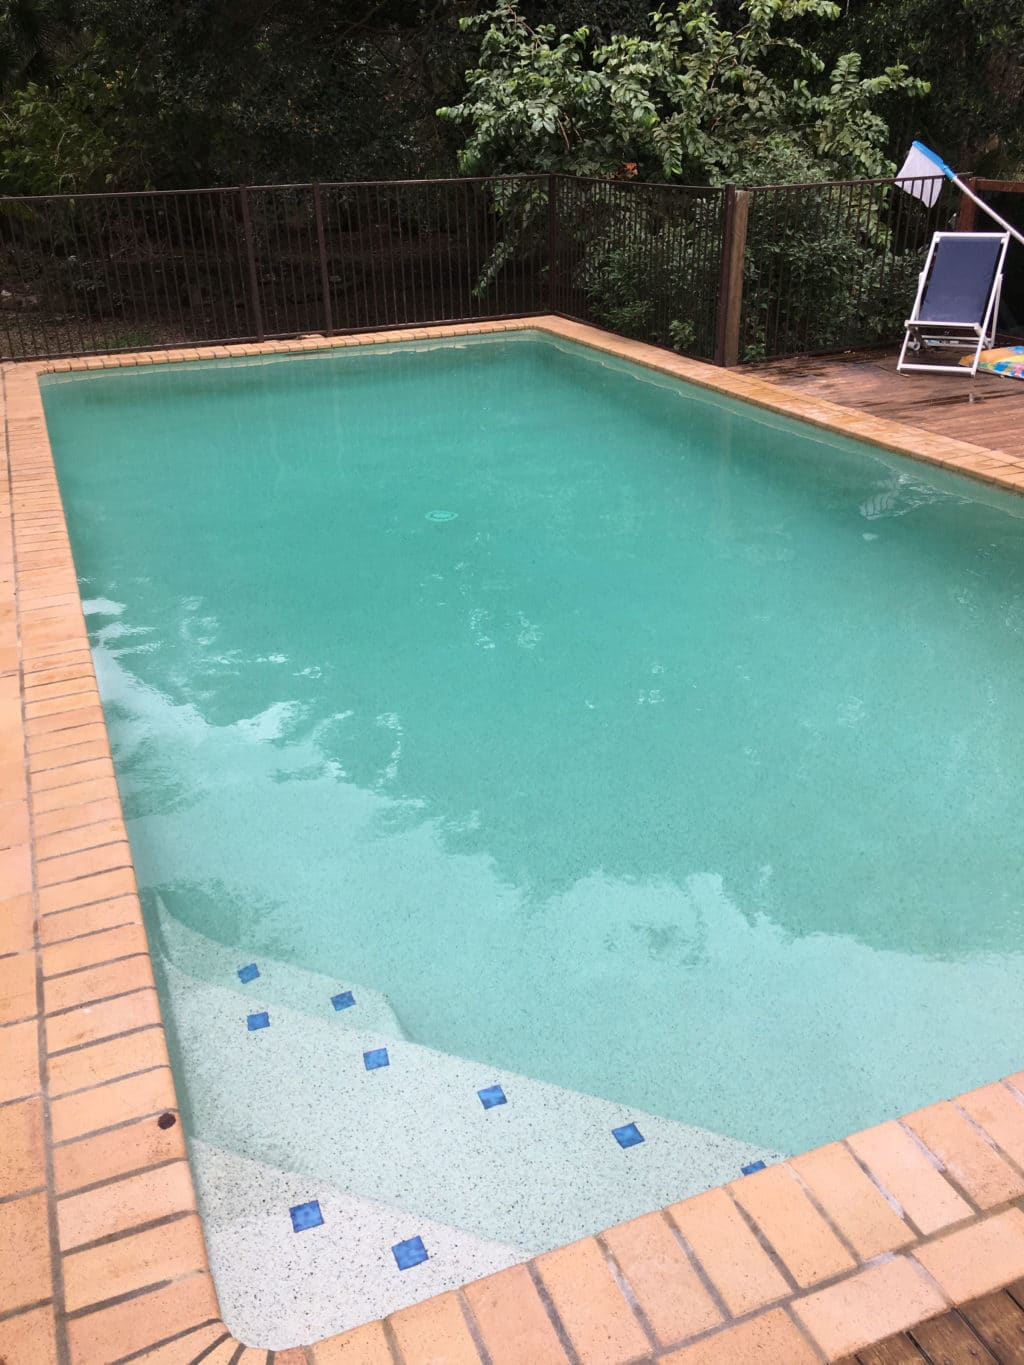 Pool After Clean - Pool Service in Gold Coast & Tweed Coast